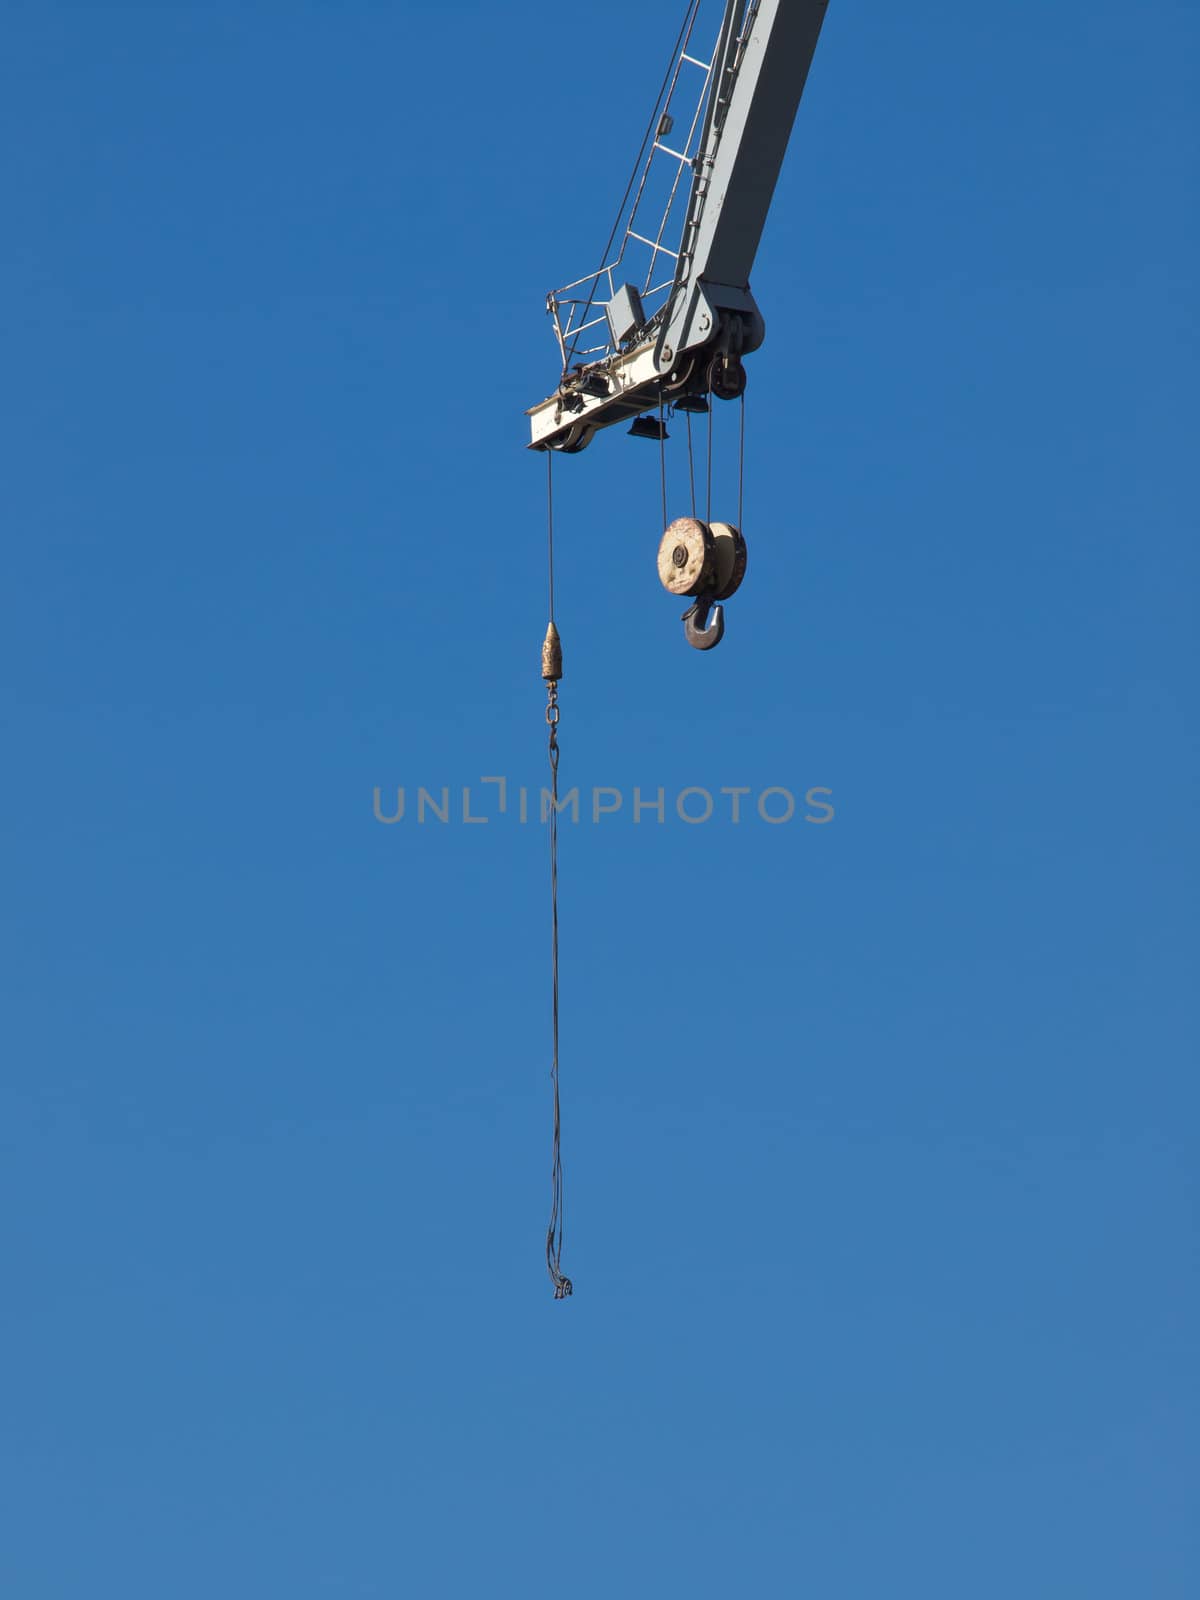 hoks on the crane and blue sky